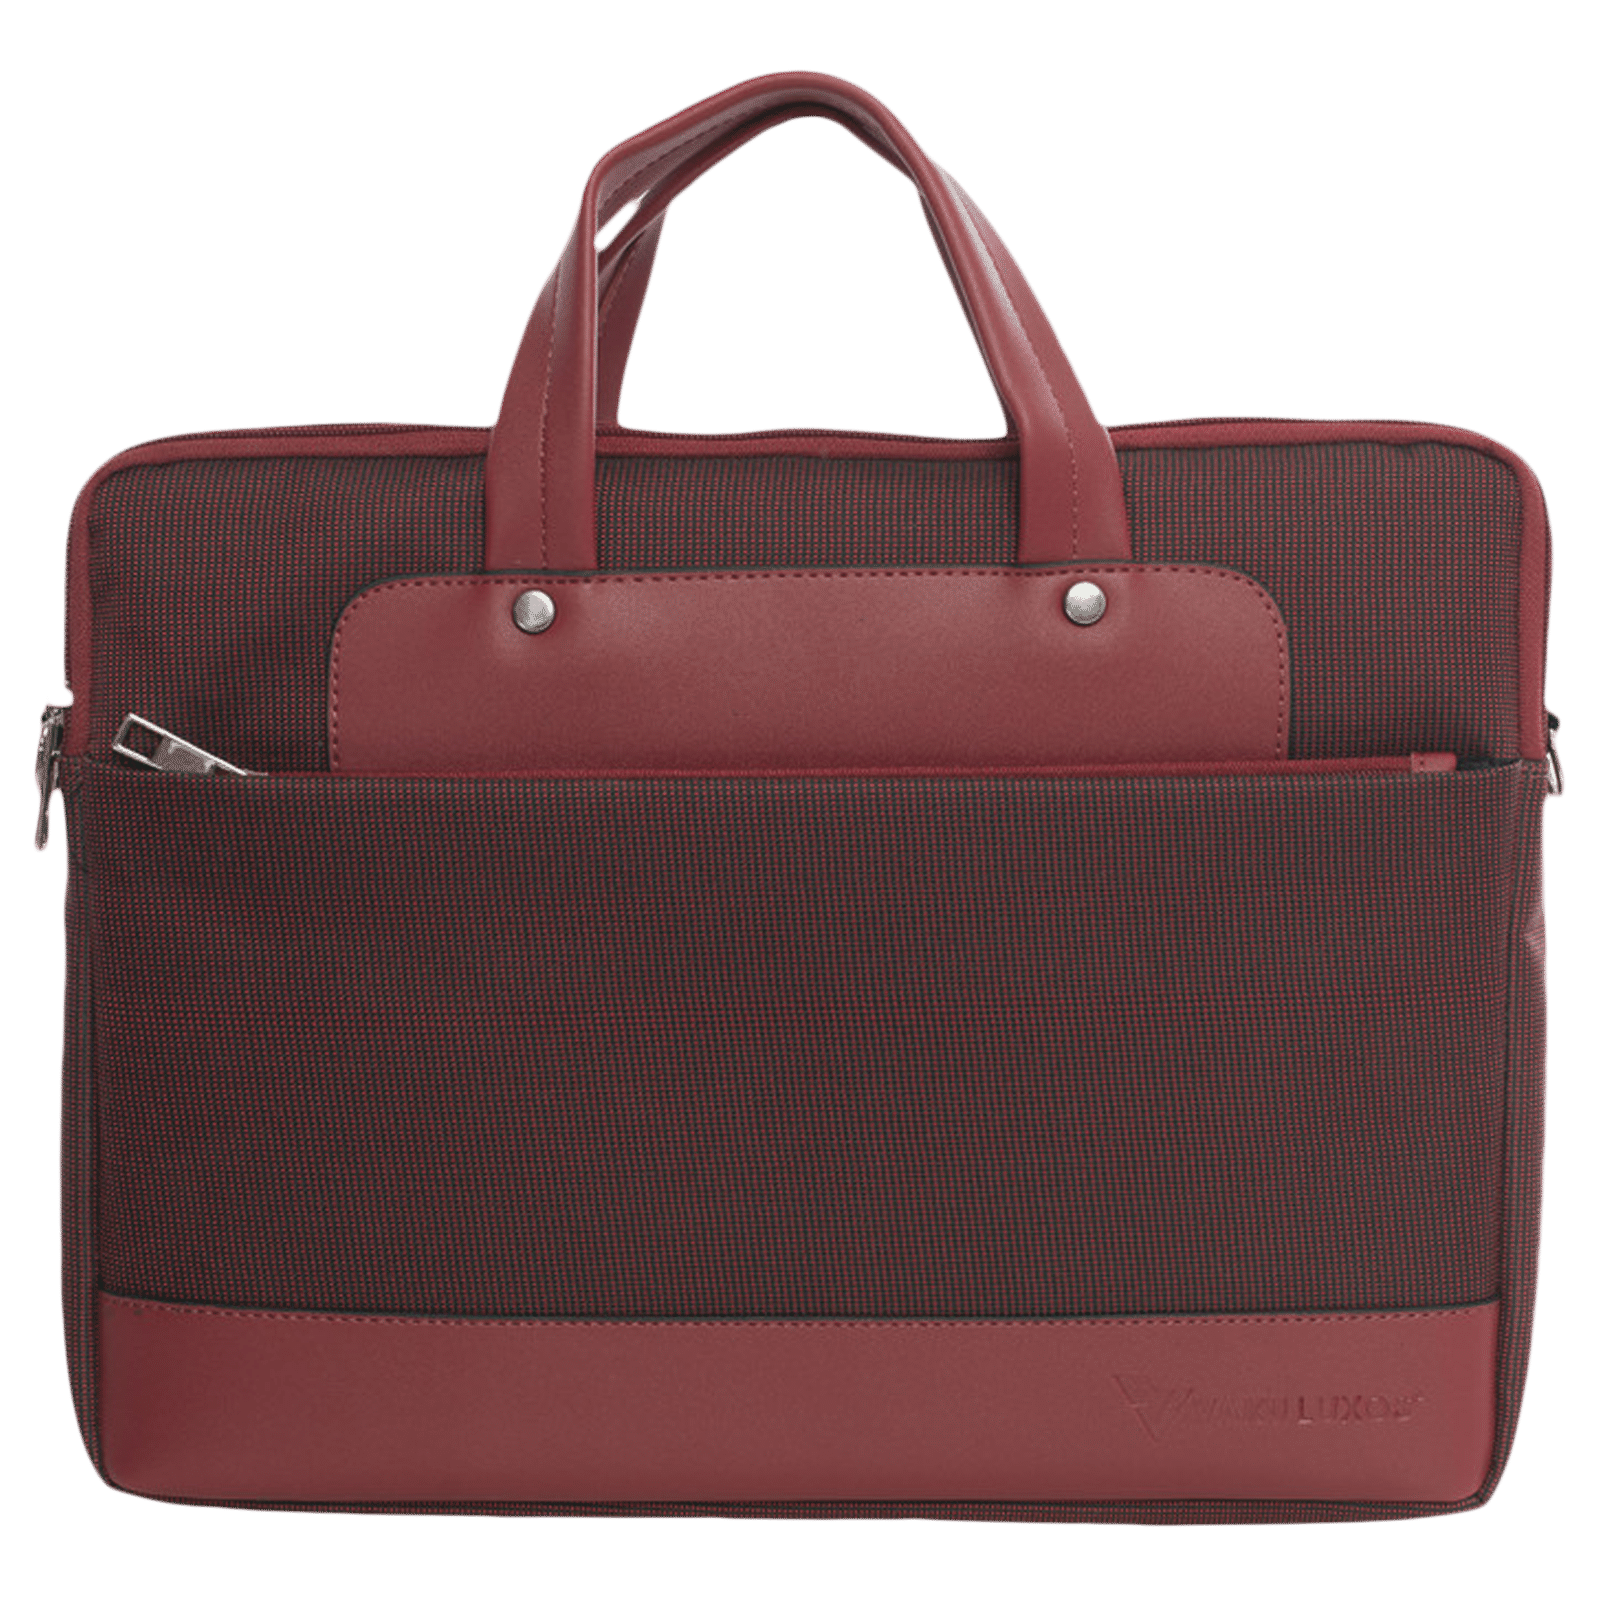 Amazon.com: Laptop Bag For Women